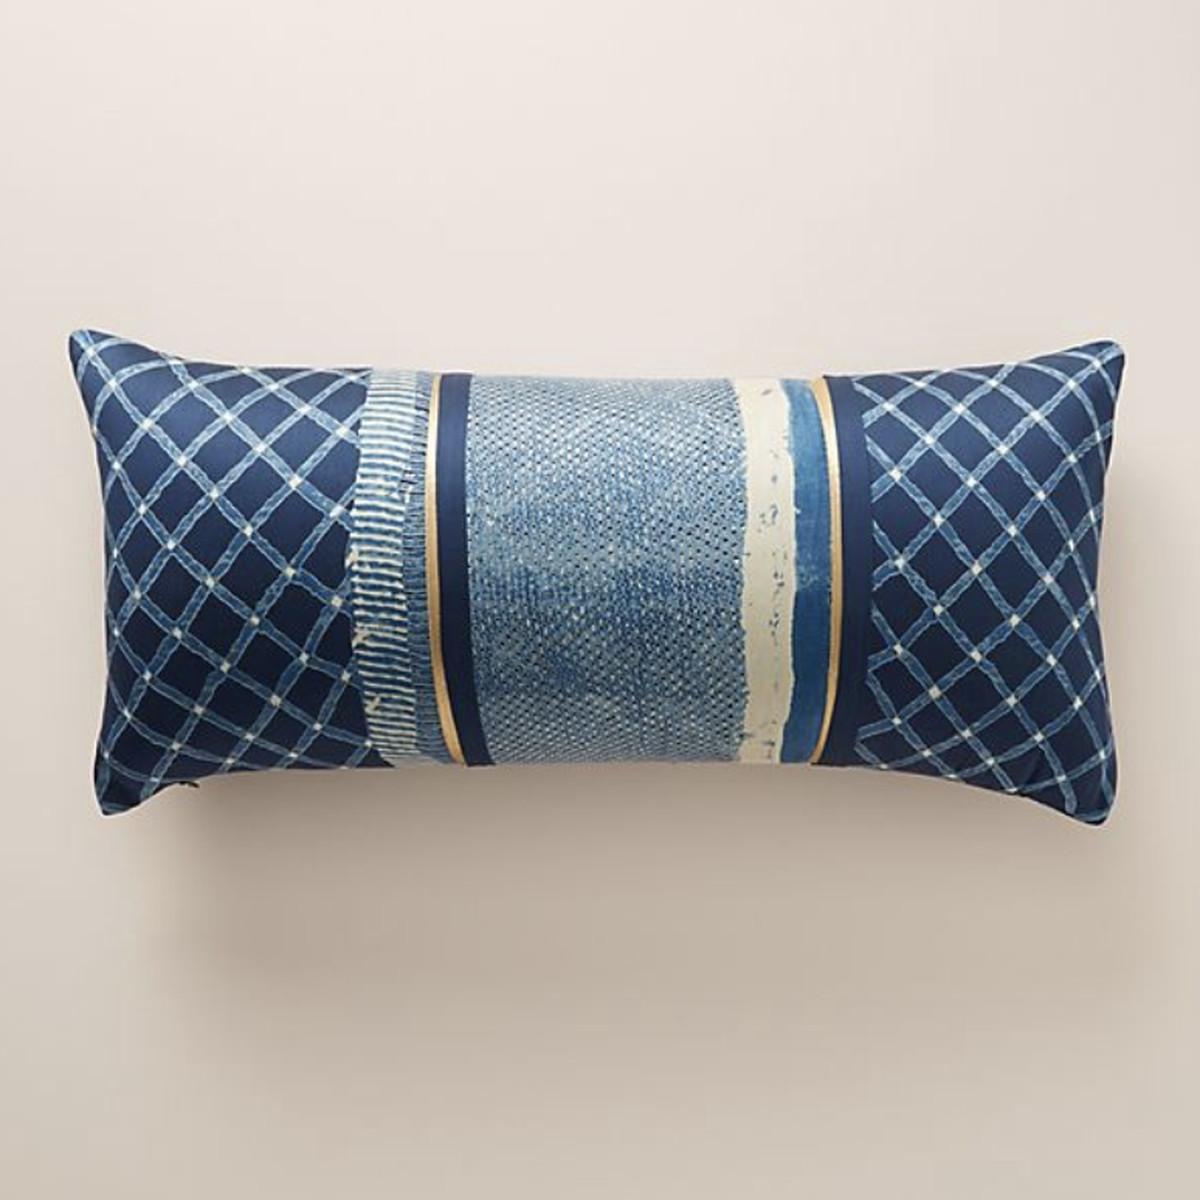 A long, rectangular throw pillow that features an indigo blue-colored design. 